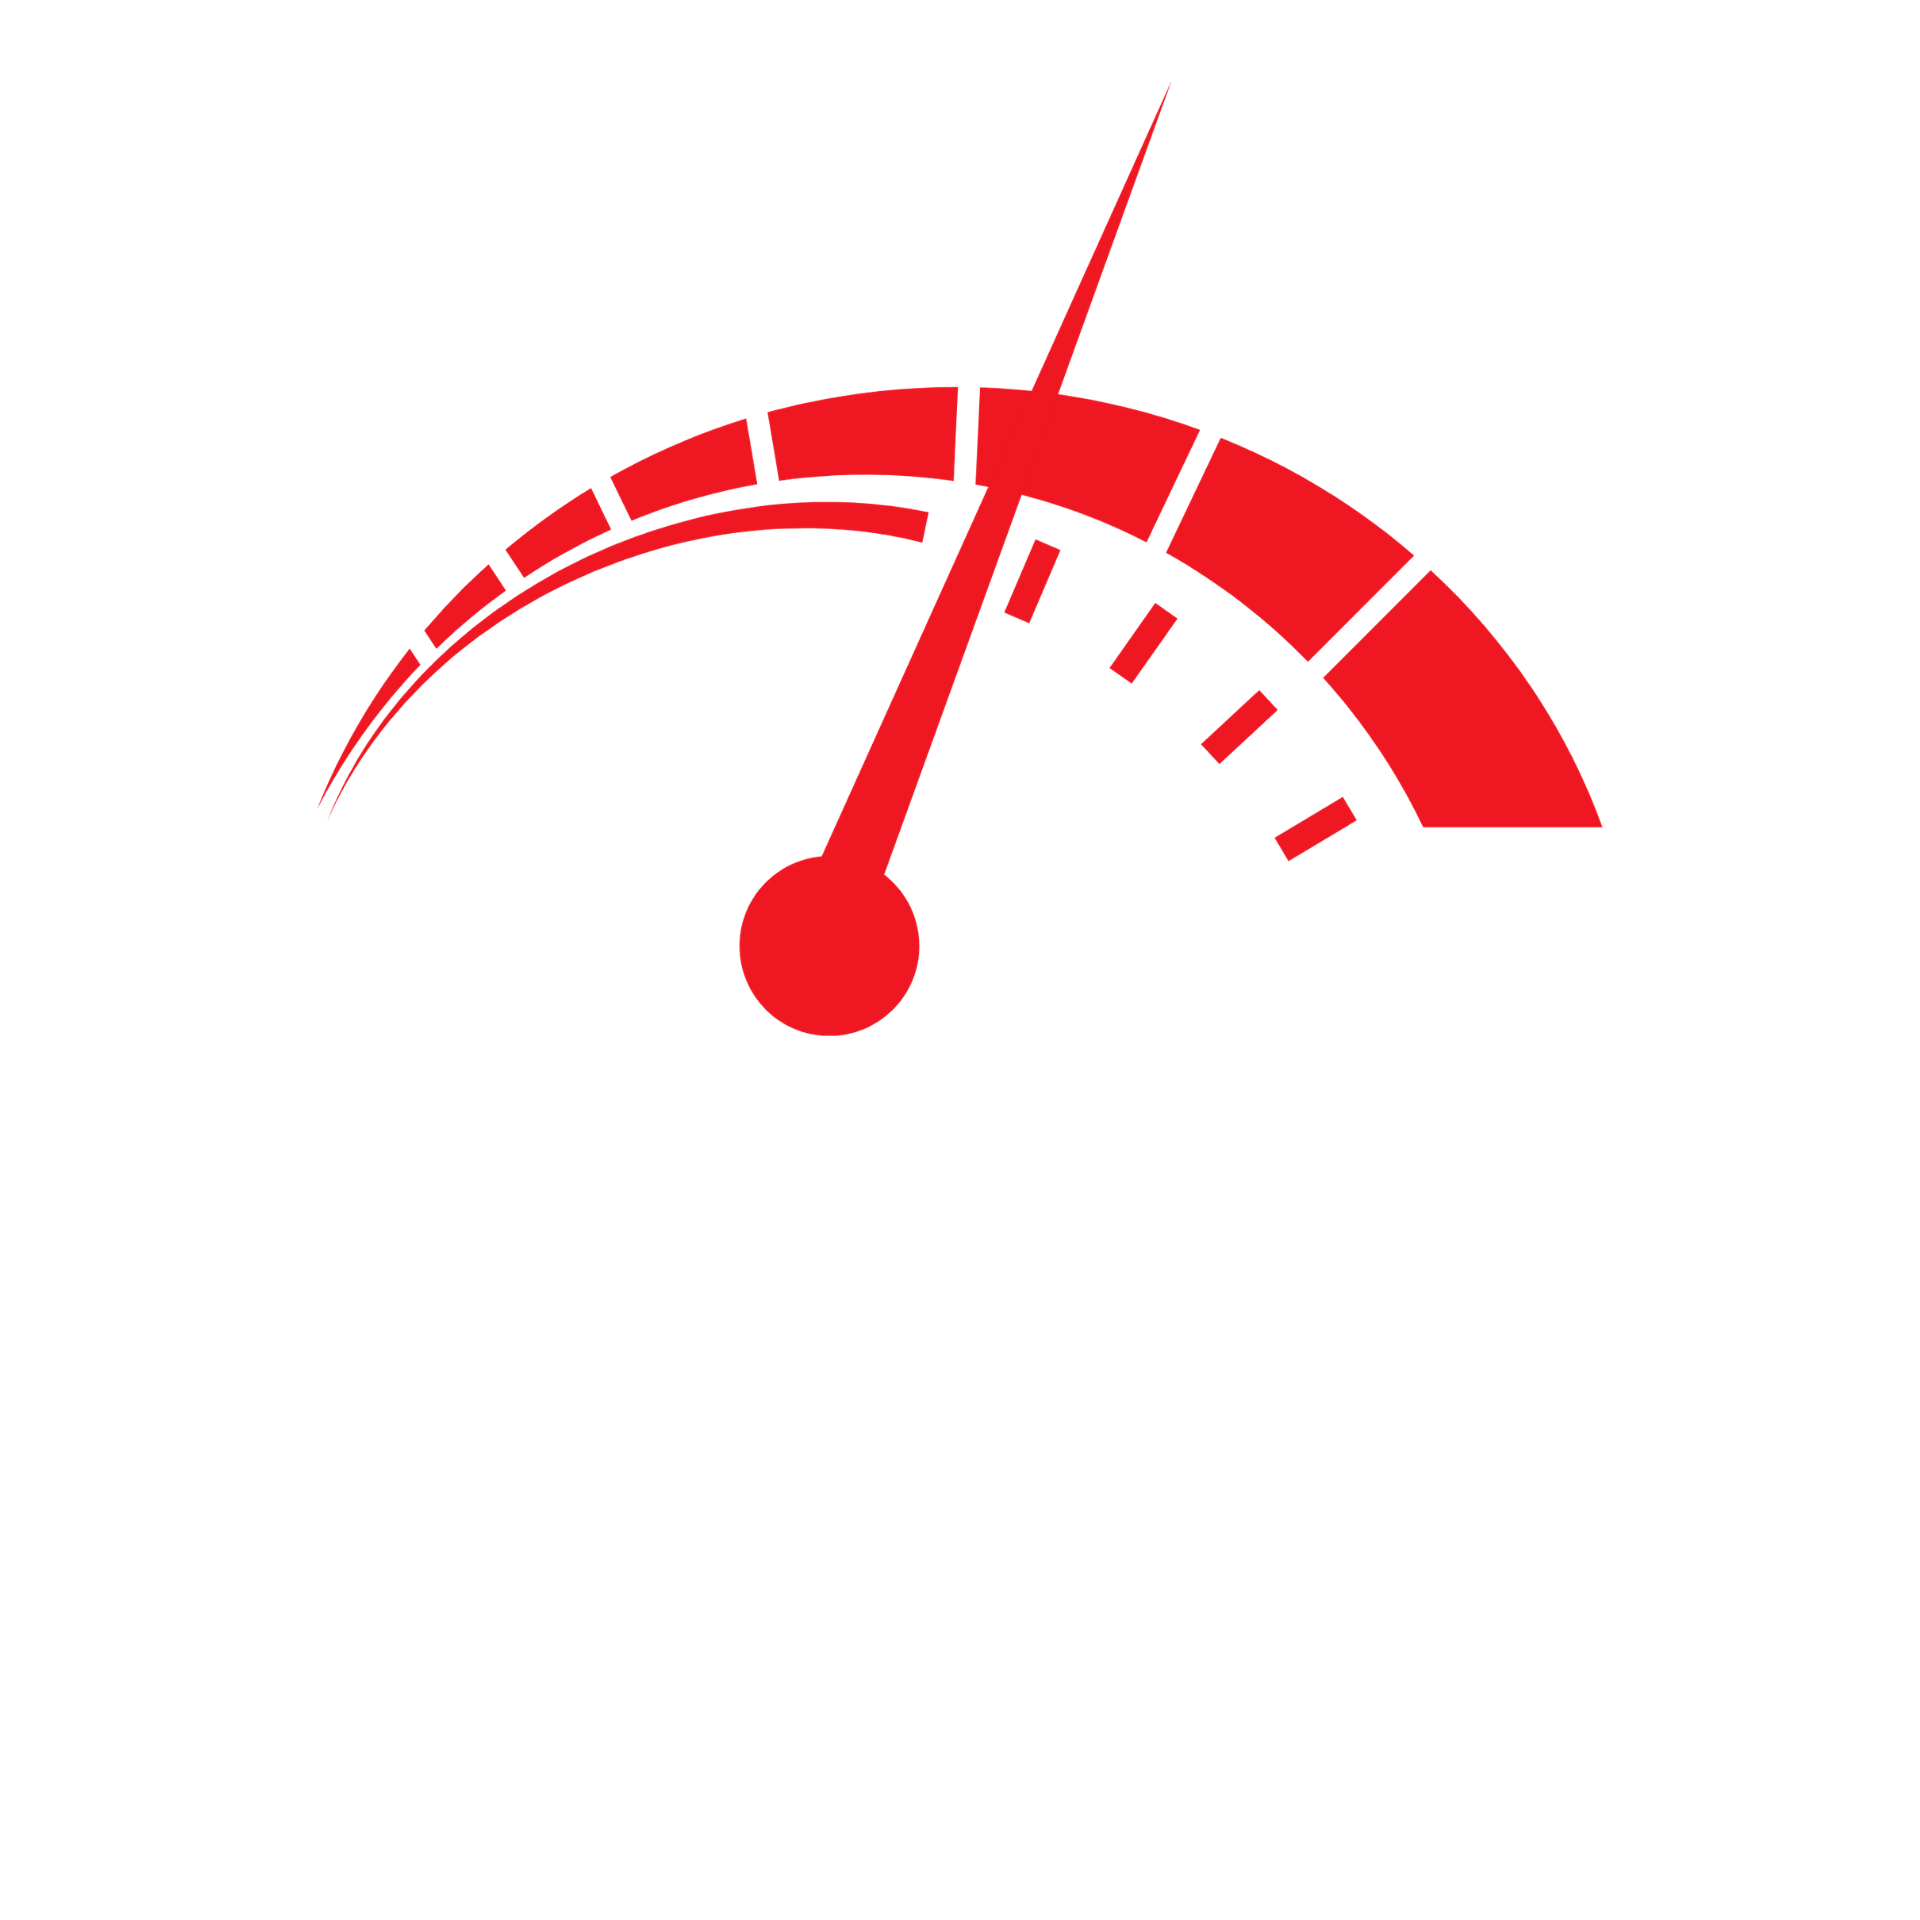 Driven Financial logo